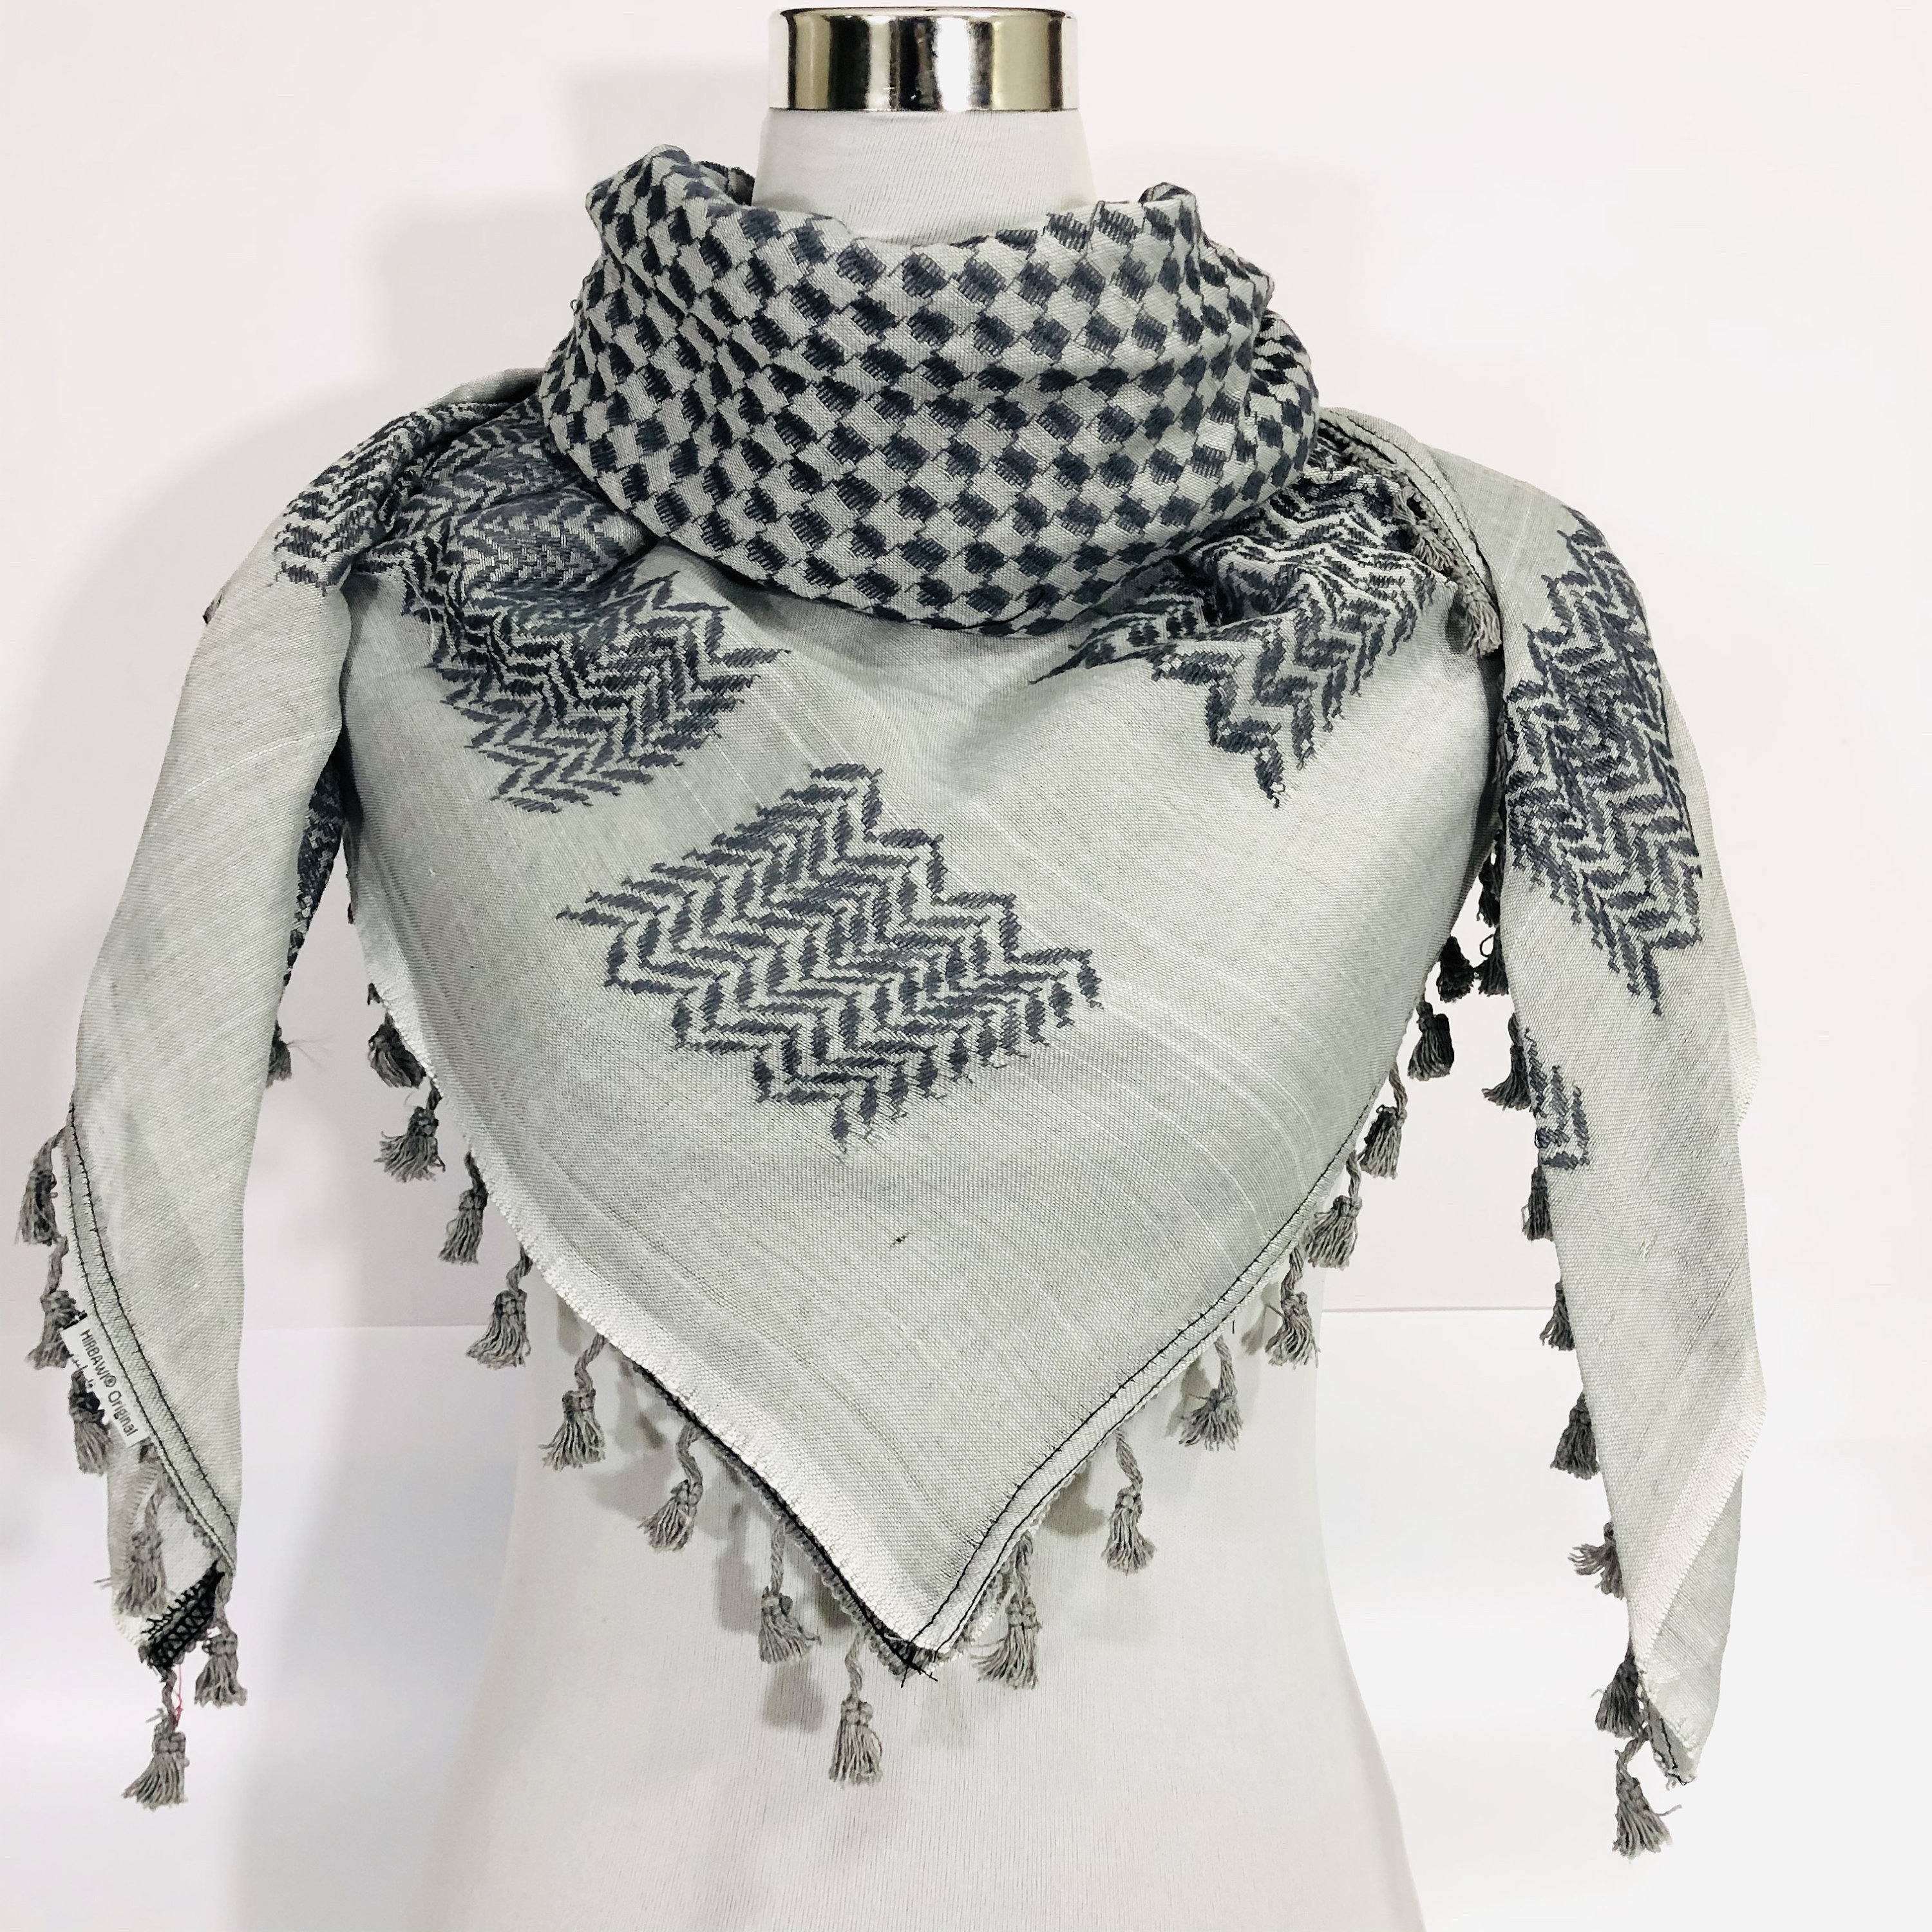 Original Palestinian Keffiyeh Shemagh Arab Hatta 100% Cotton